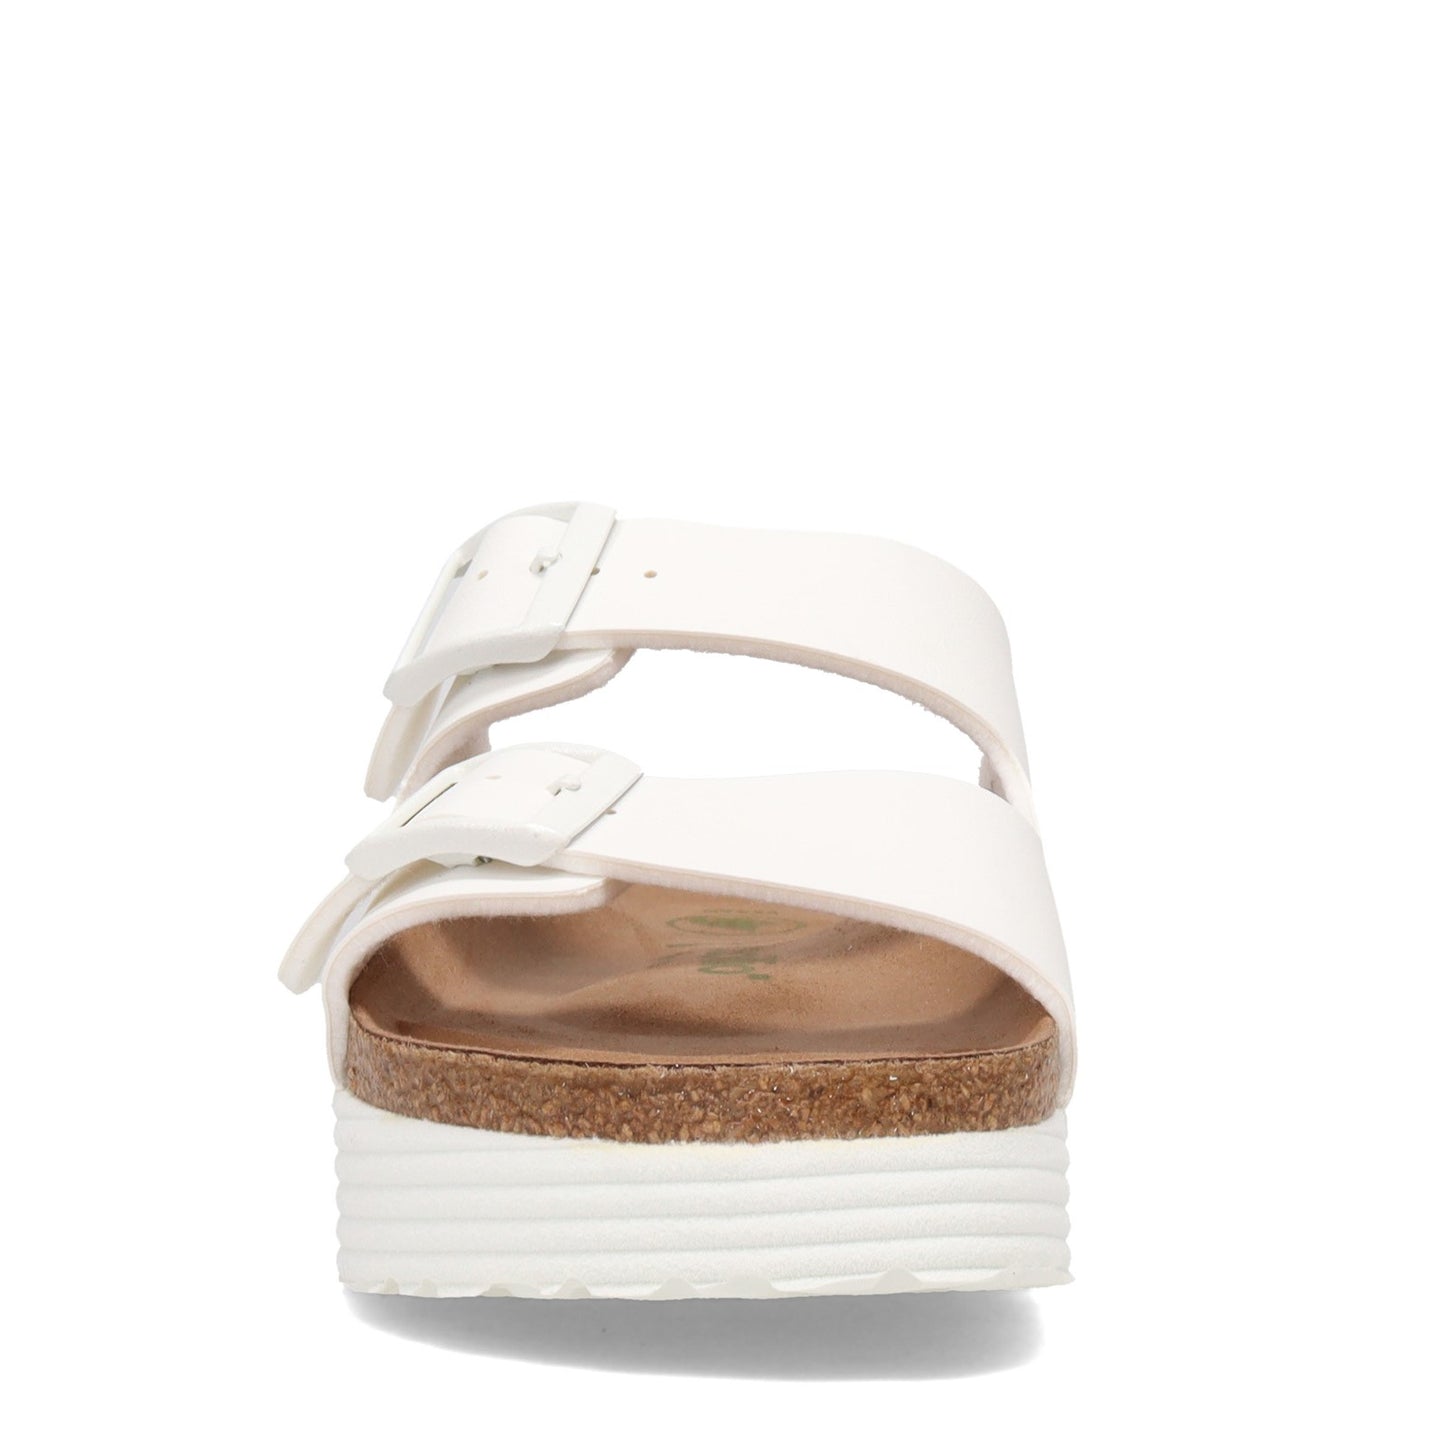 Peltz Shoes  Women's Birkenstock Arizona Platform Sandal - Narrow Width WHITE 1018 581 N